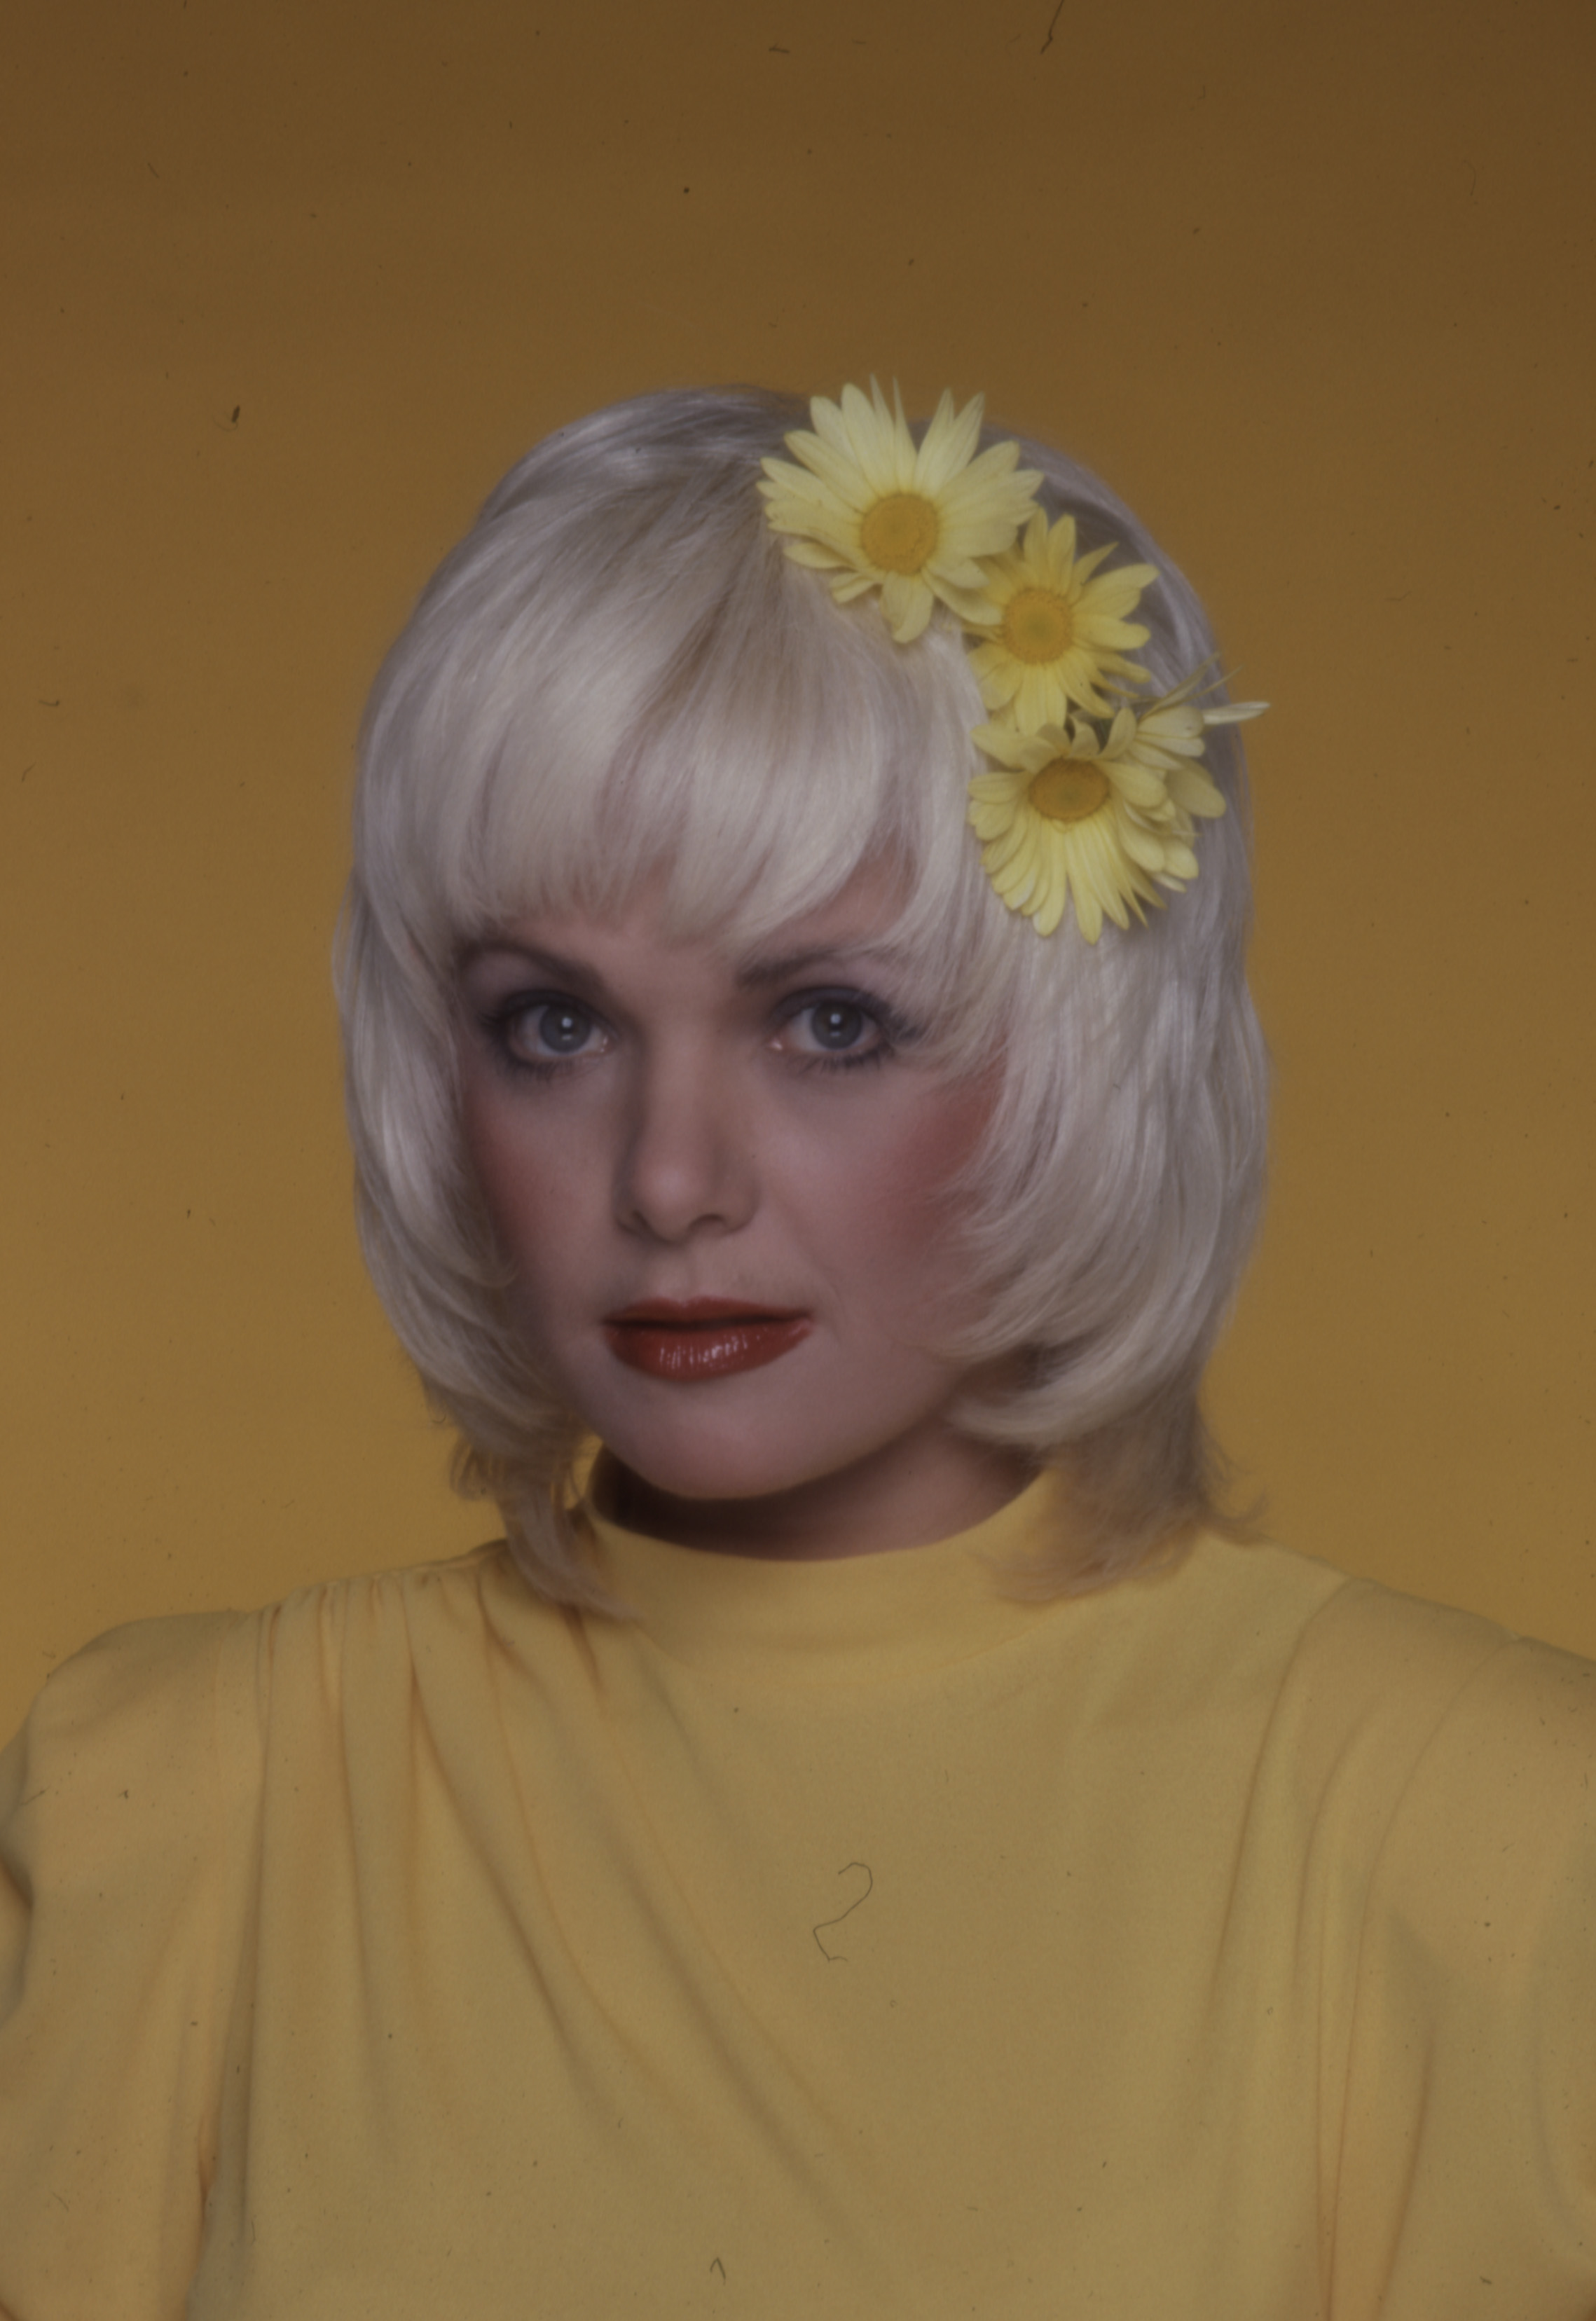 Ann Jillian in Los Angeles, California, 1980. | Source: Getty Images